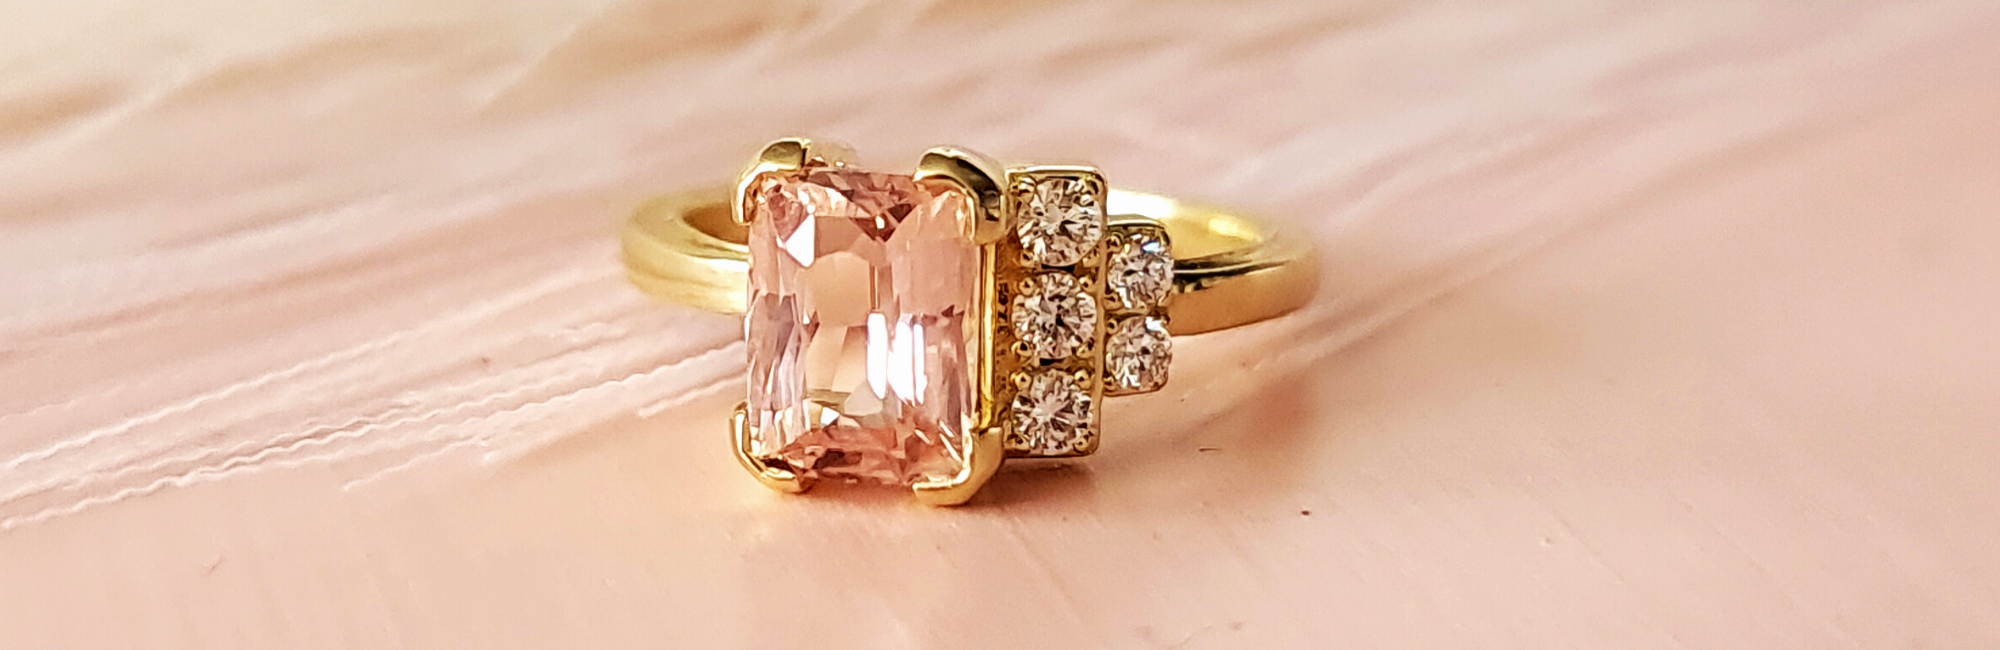 Asymmetric Engagement ring design